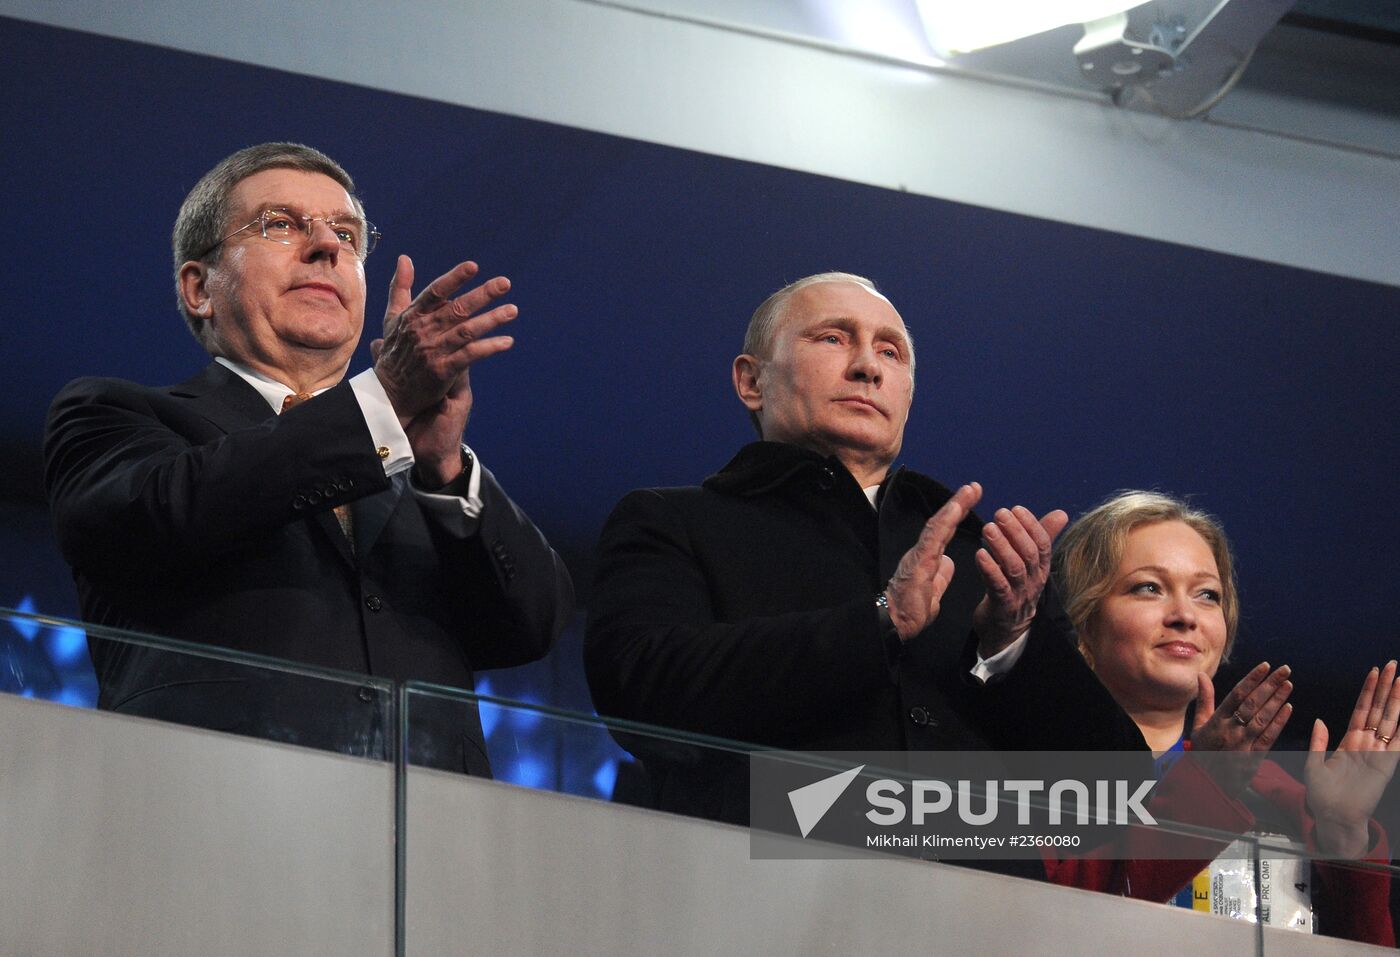 Vladimir Putin at opening ceremony of XXII Olympic Winter Games in Sochi